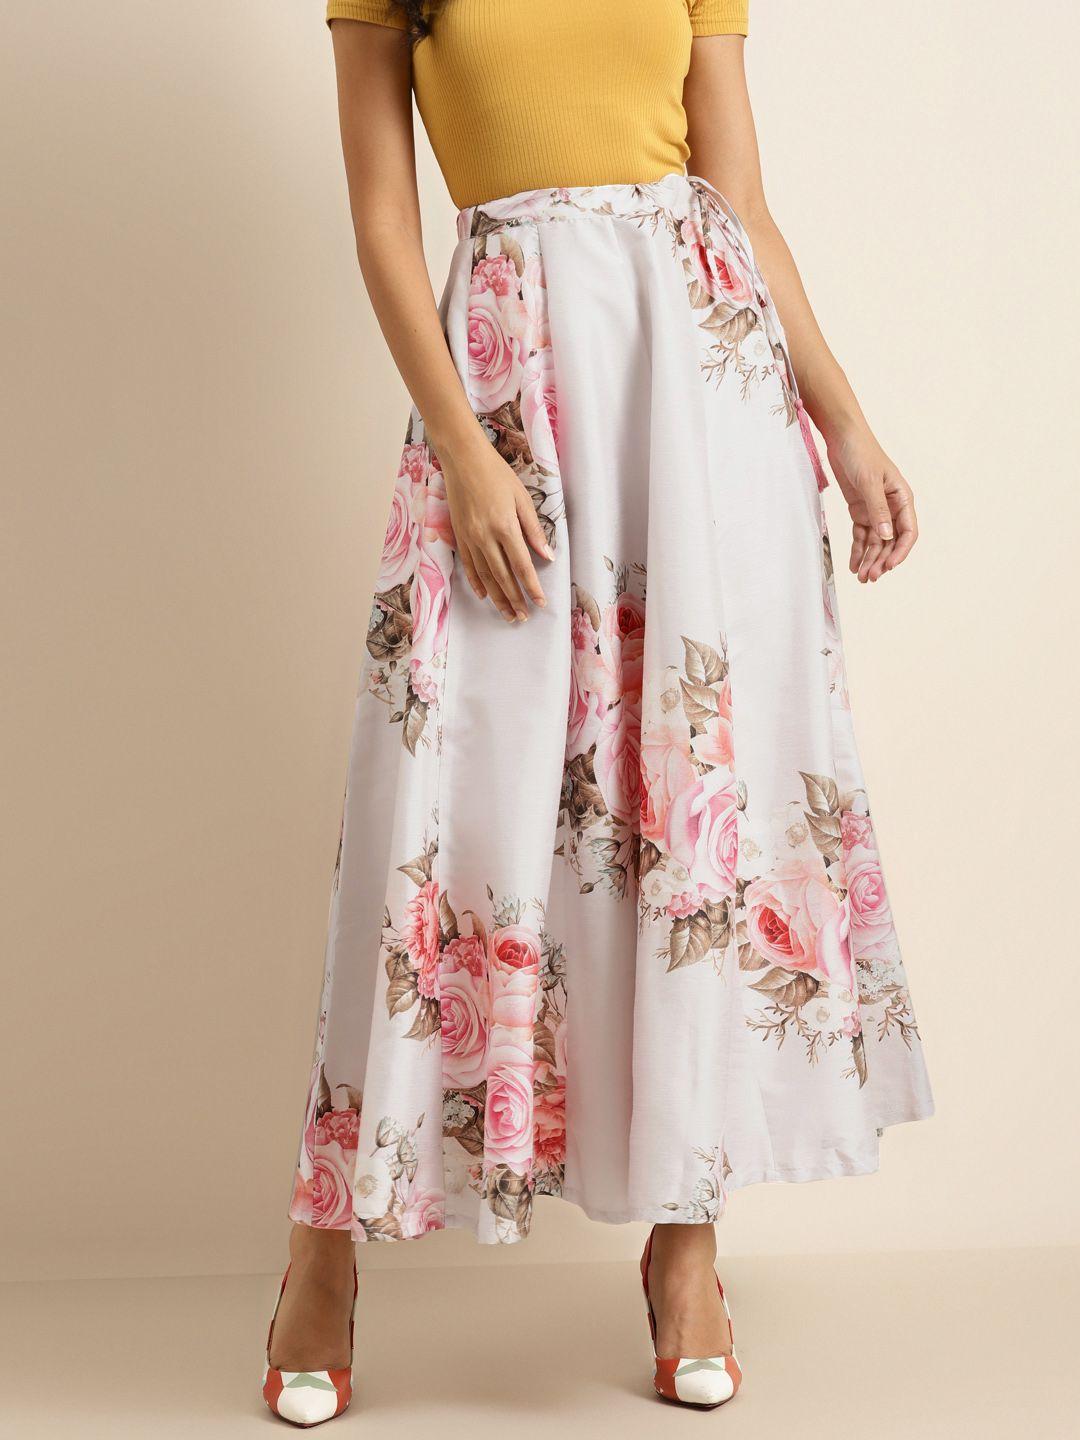 shae-by-sassafras-grey-&-pink-floral-print-flared-maxi-skirt